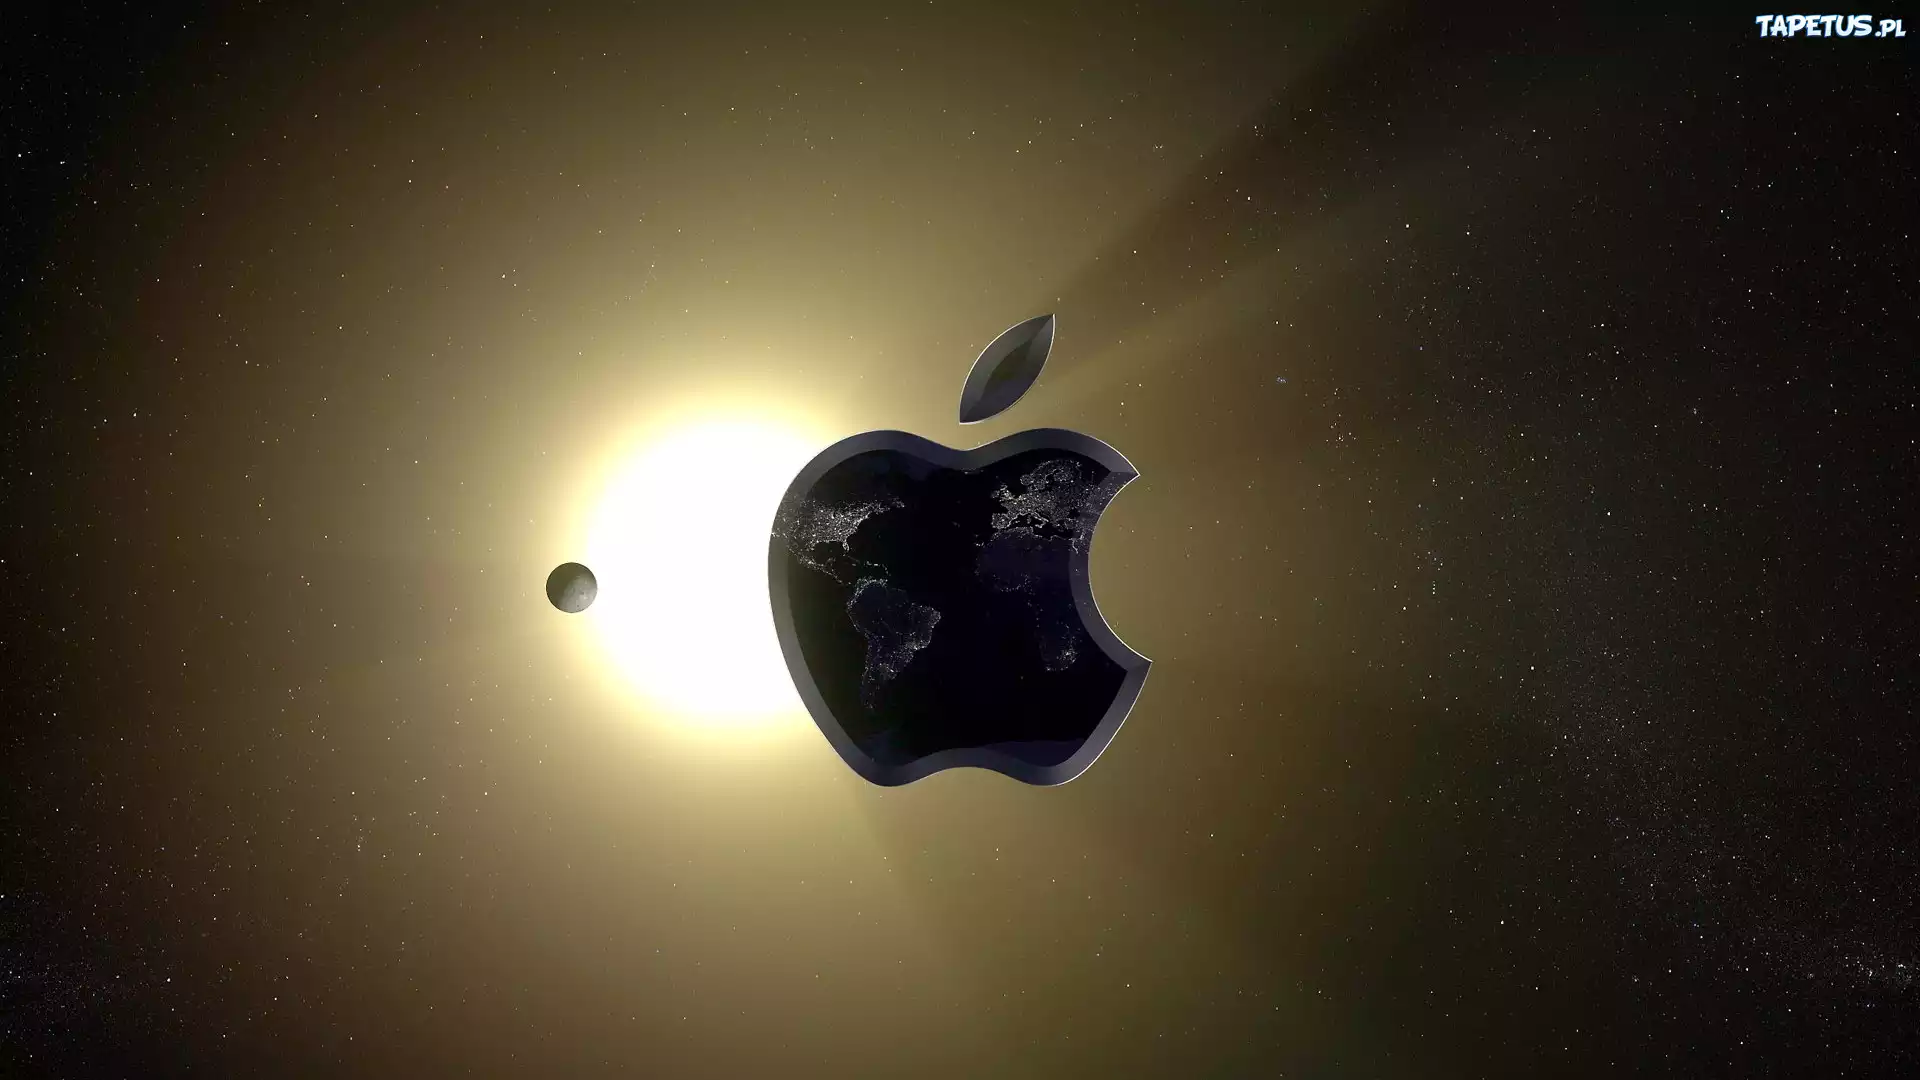 Обои с планетой на айфон. Космос Apple. Обои Apple. Яблоко в космосе. Обои эпл Планета.